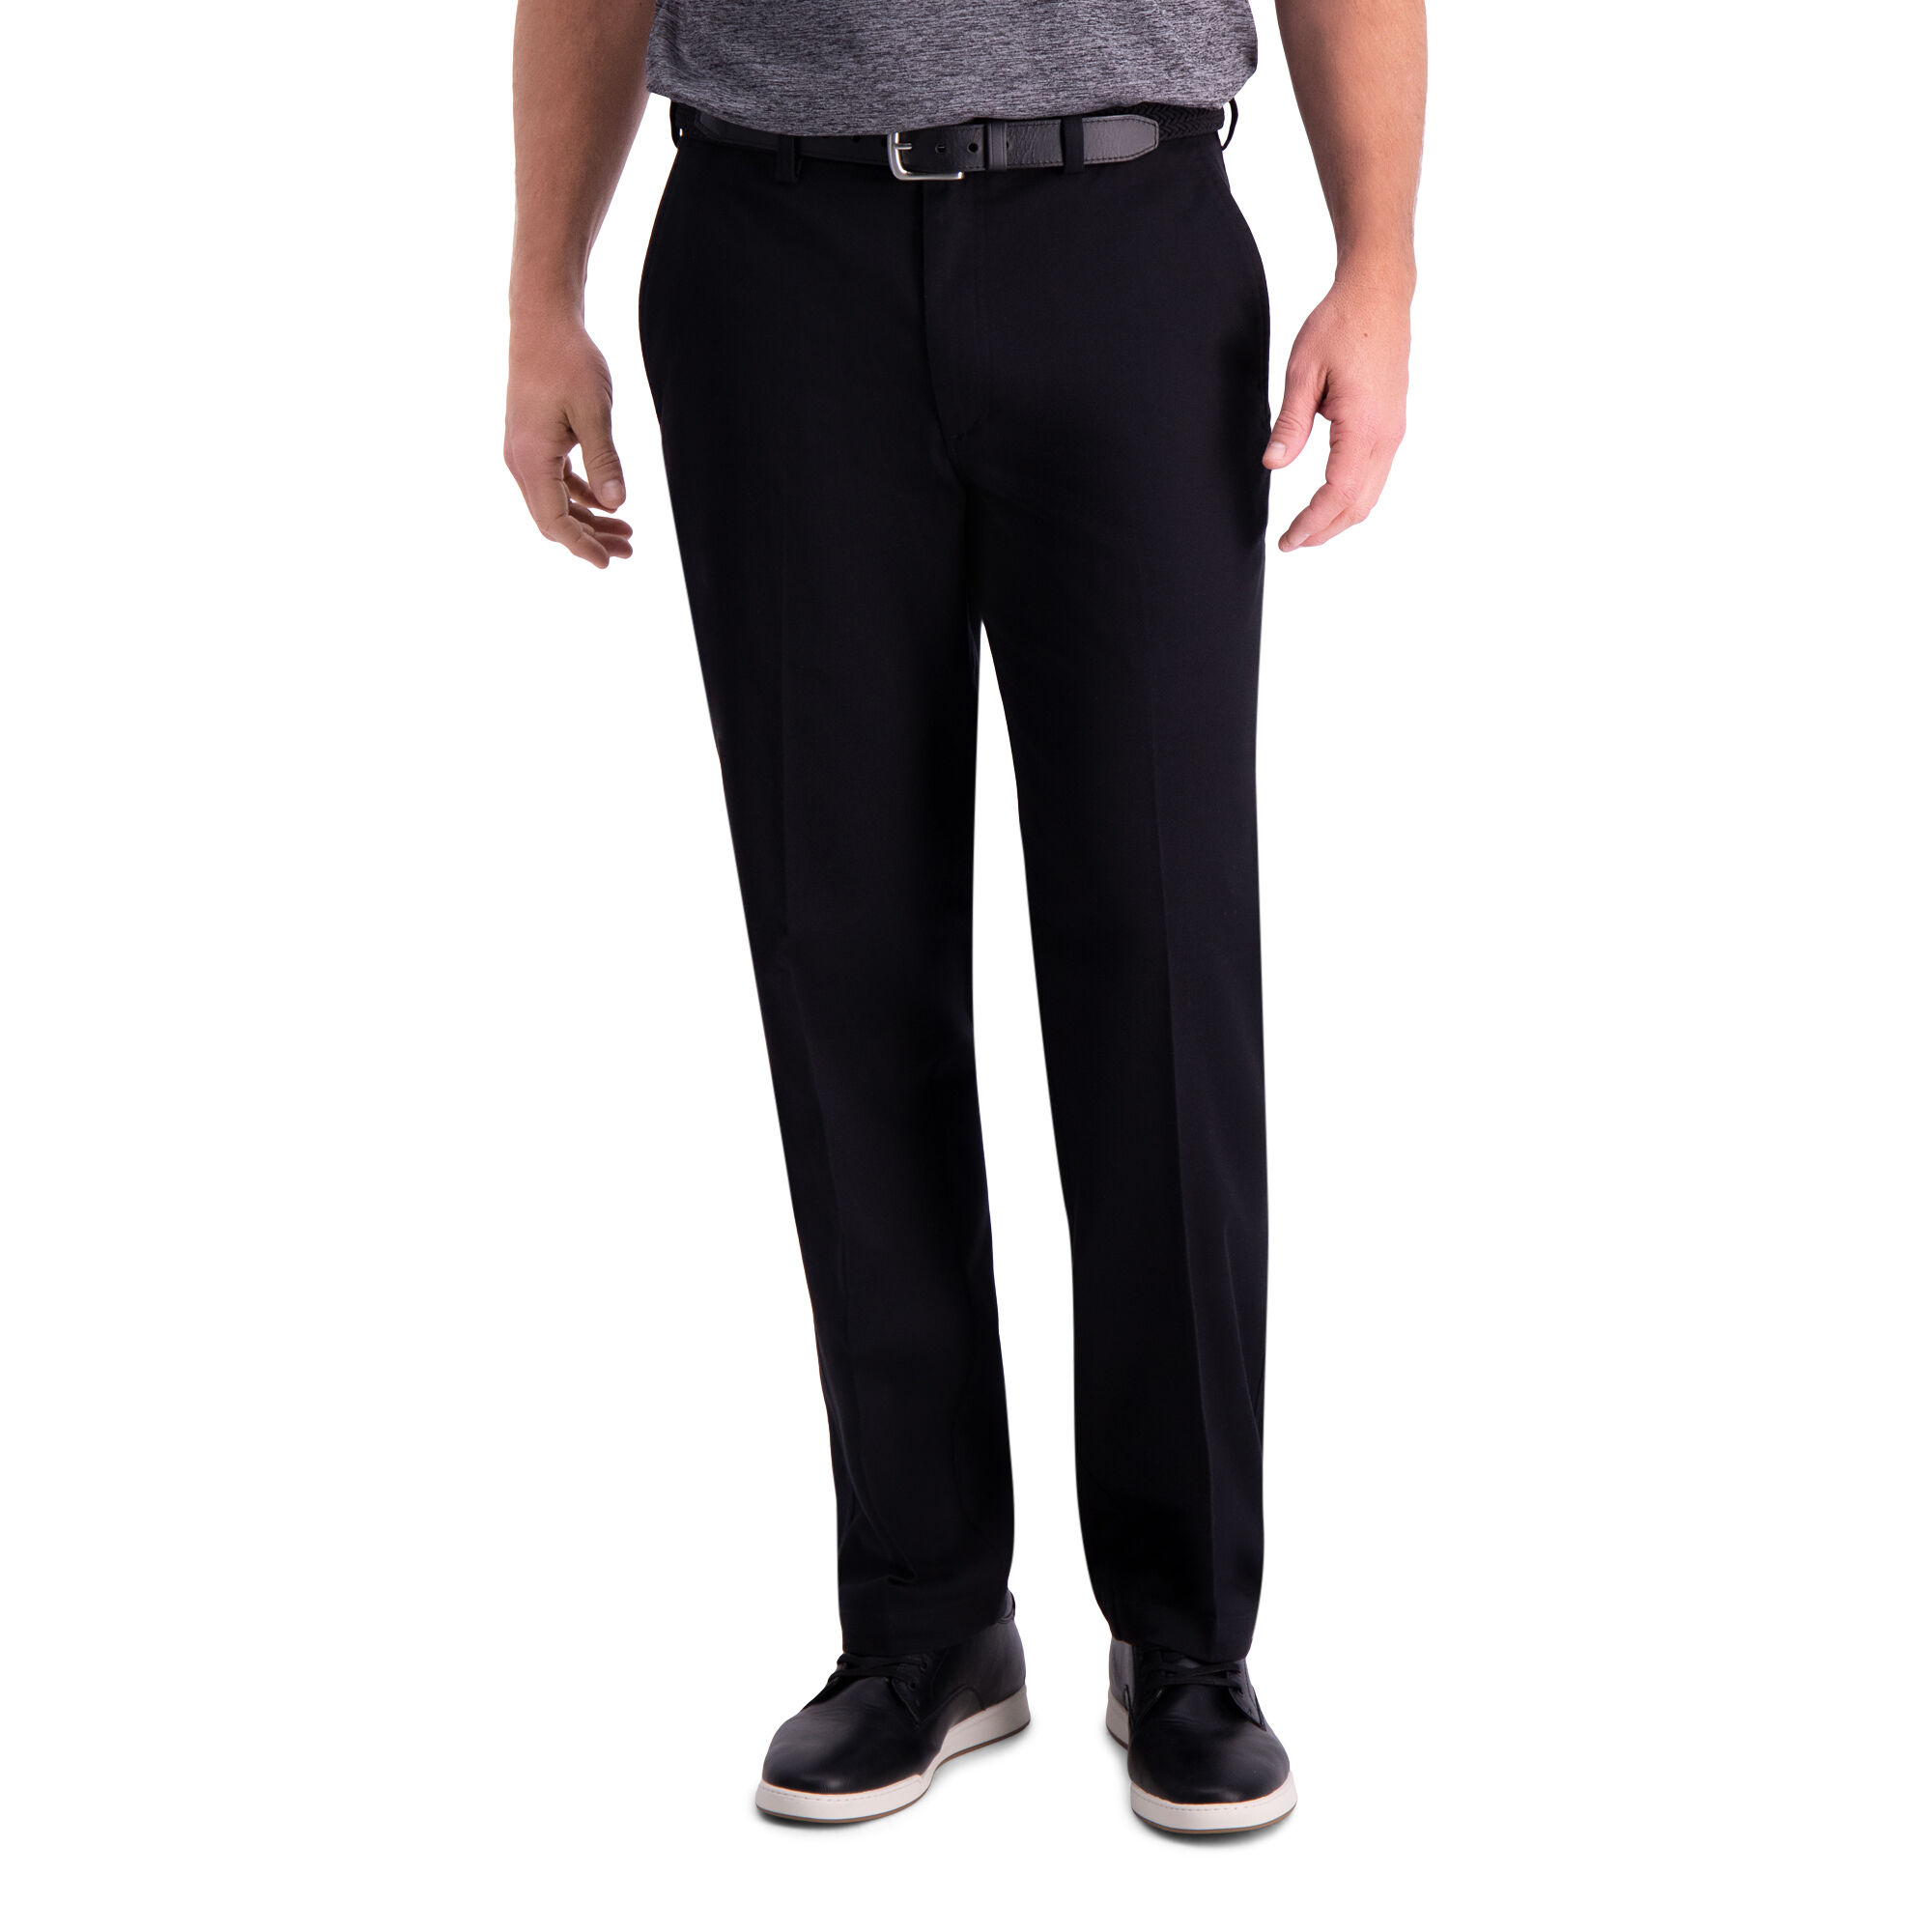 Haggar Men's Premium Comfort Khaki Flat Front Classic Fit Pant